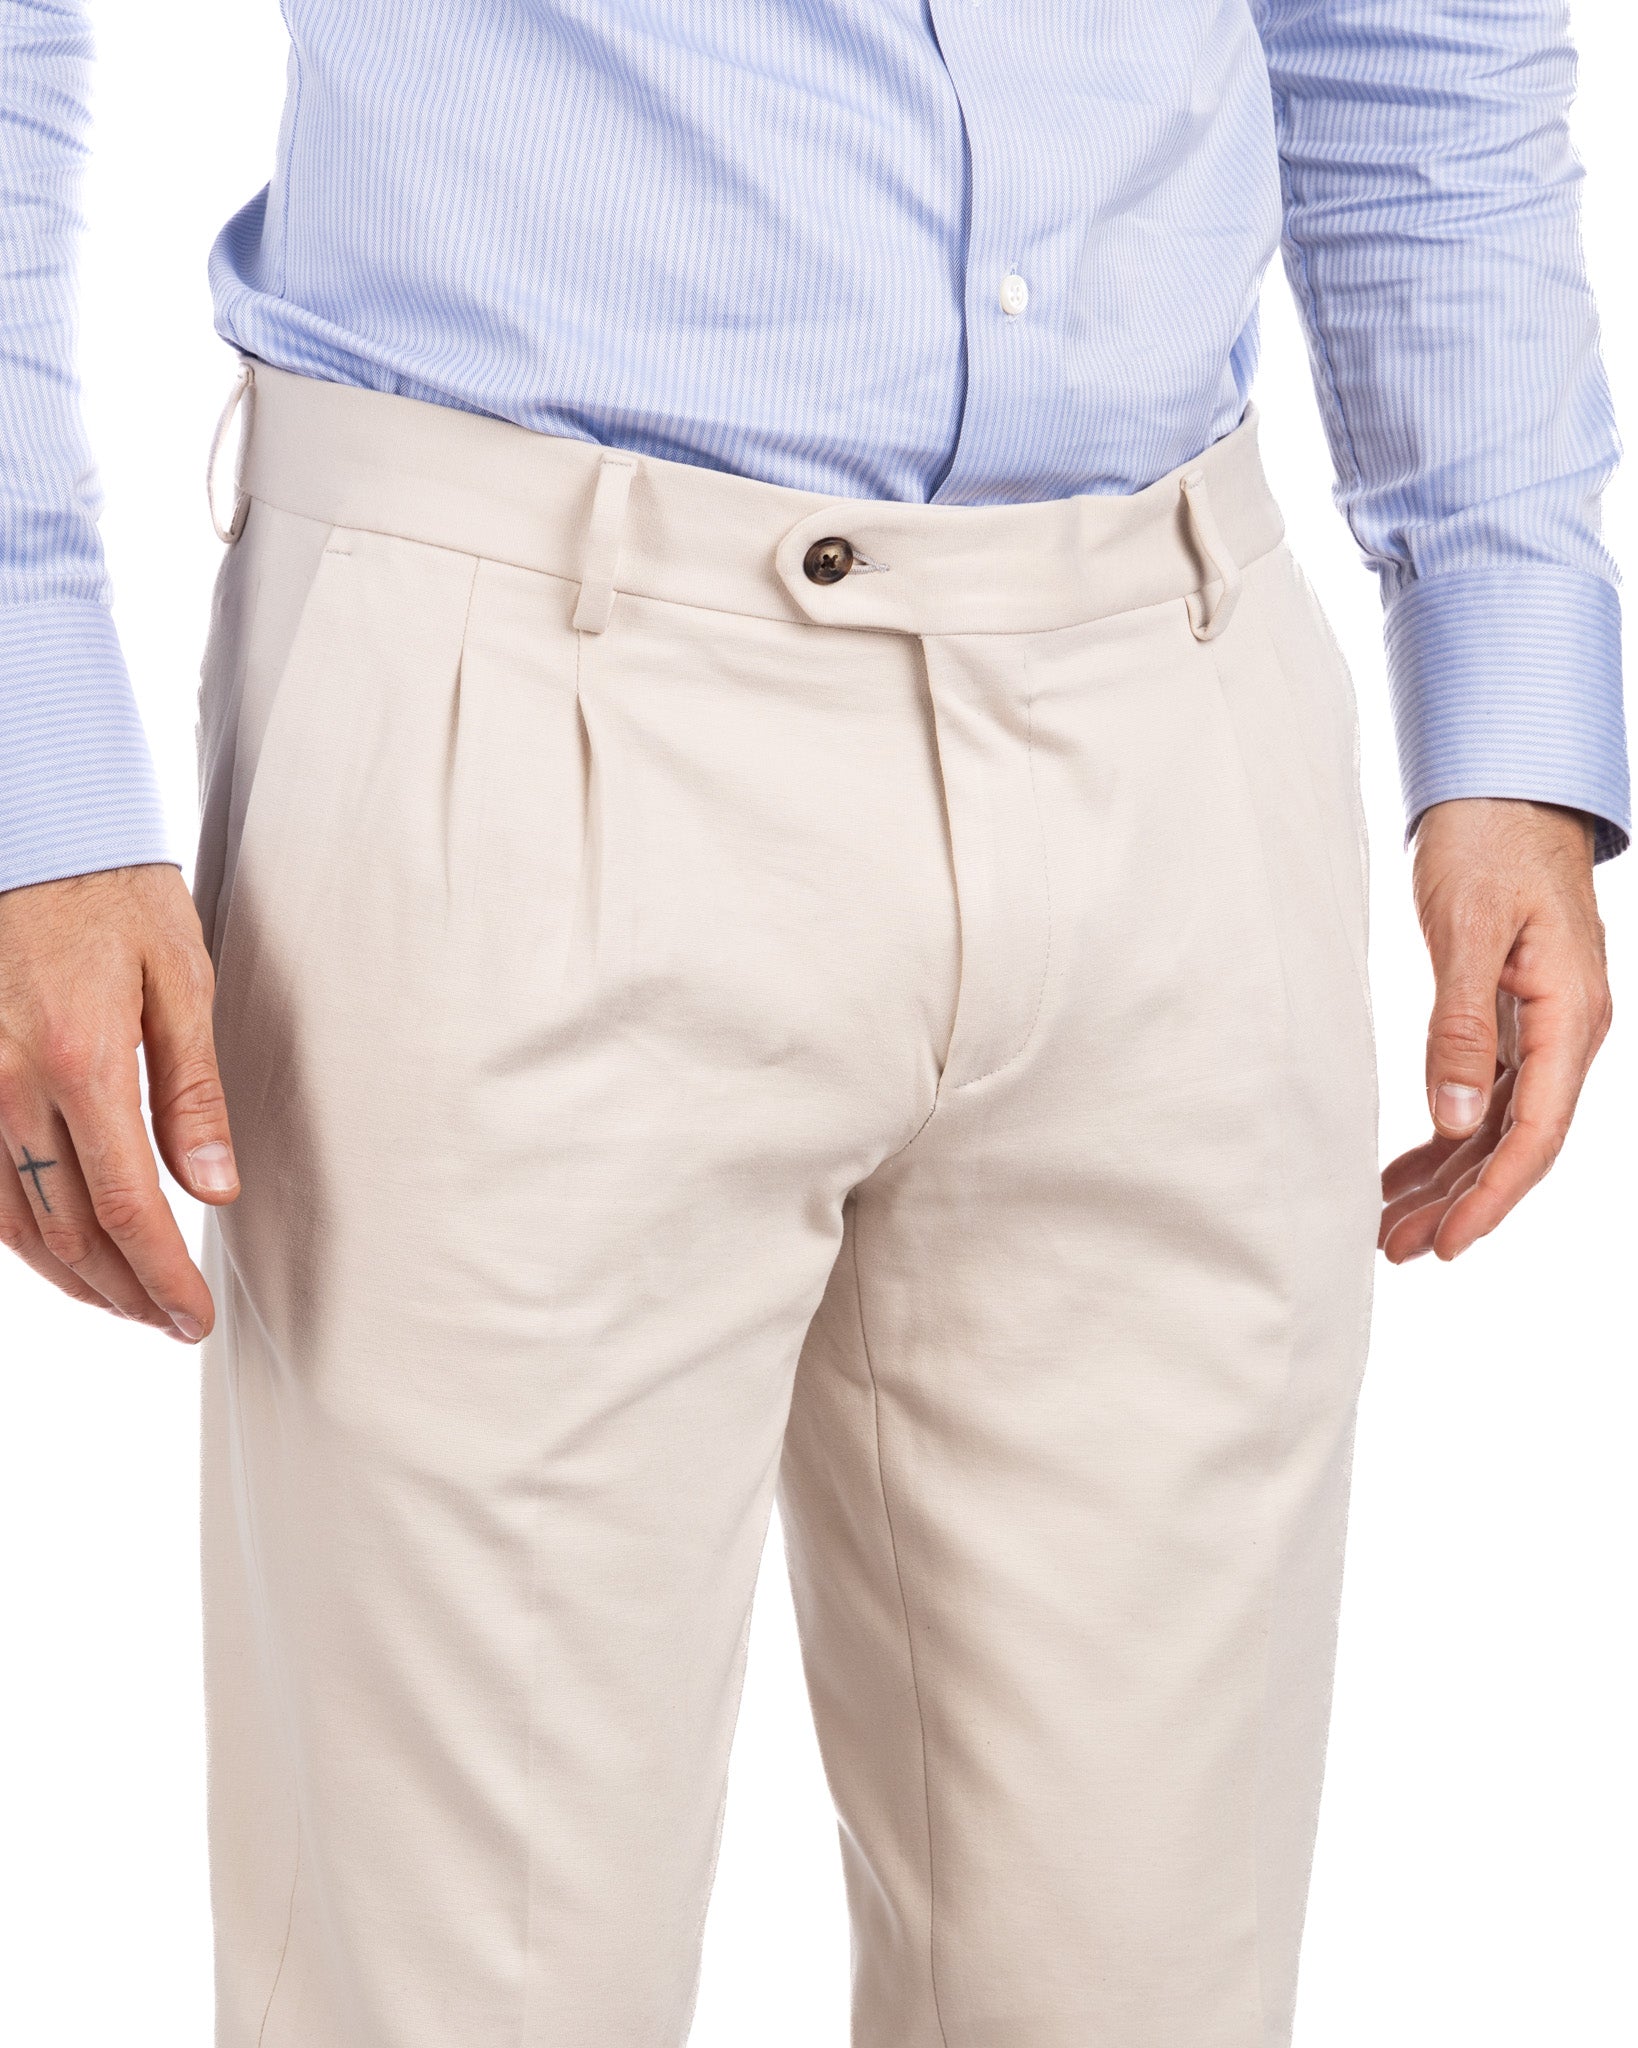 Thomas - pantalone due pinces panna in punto milano